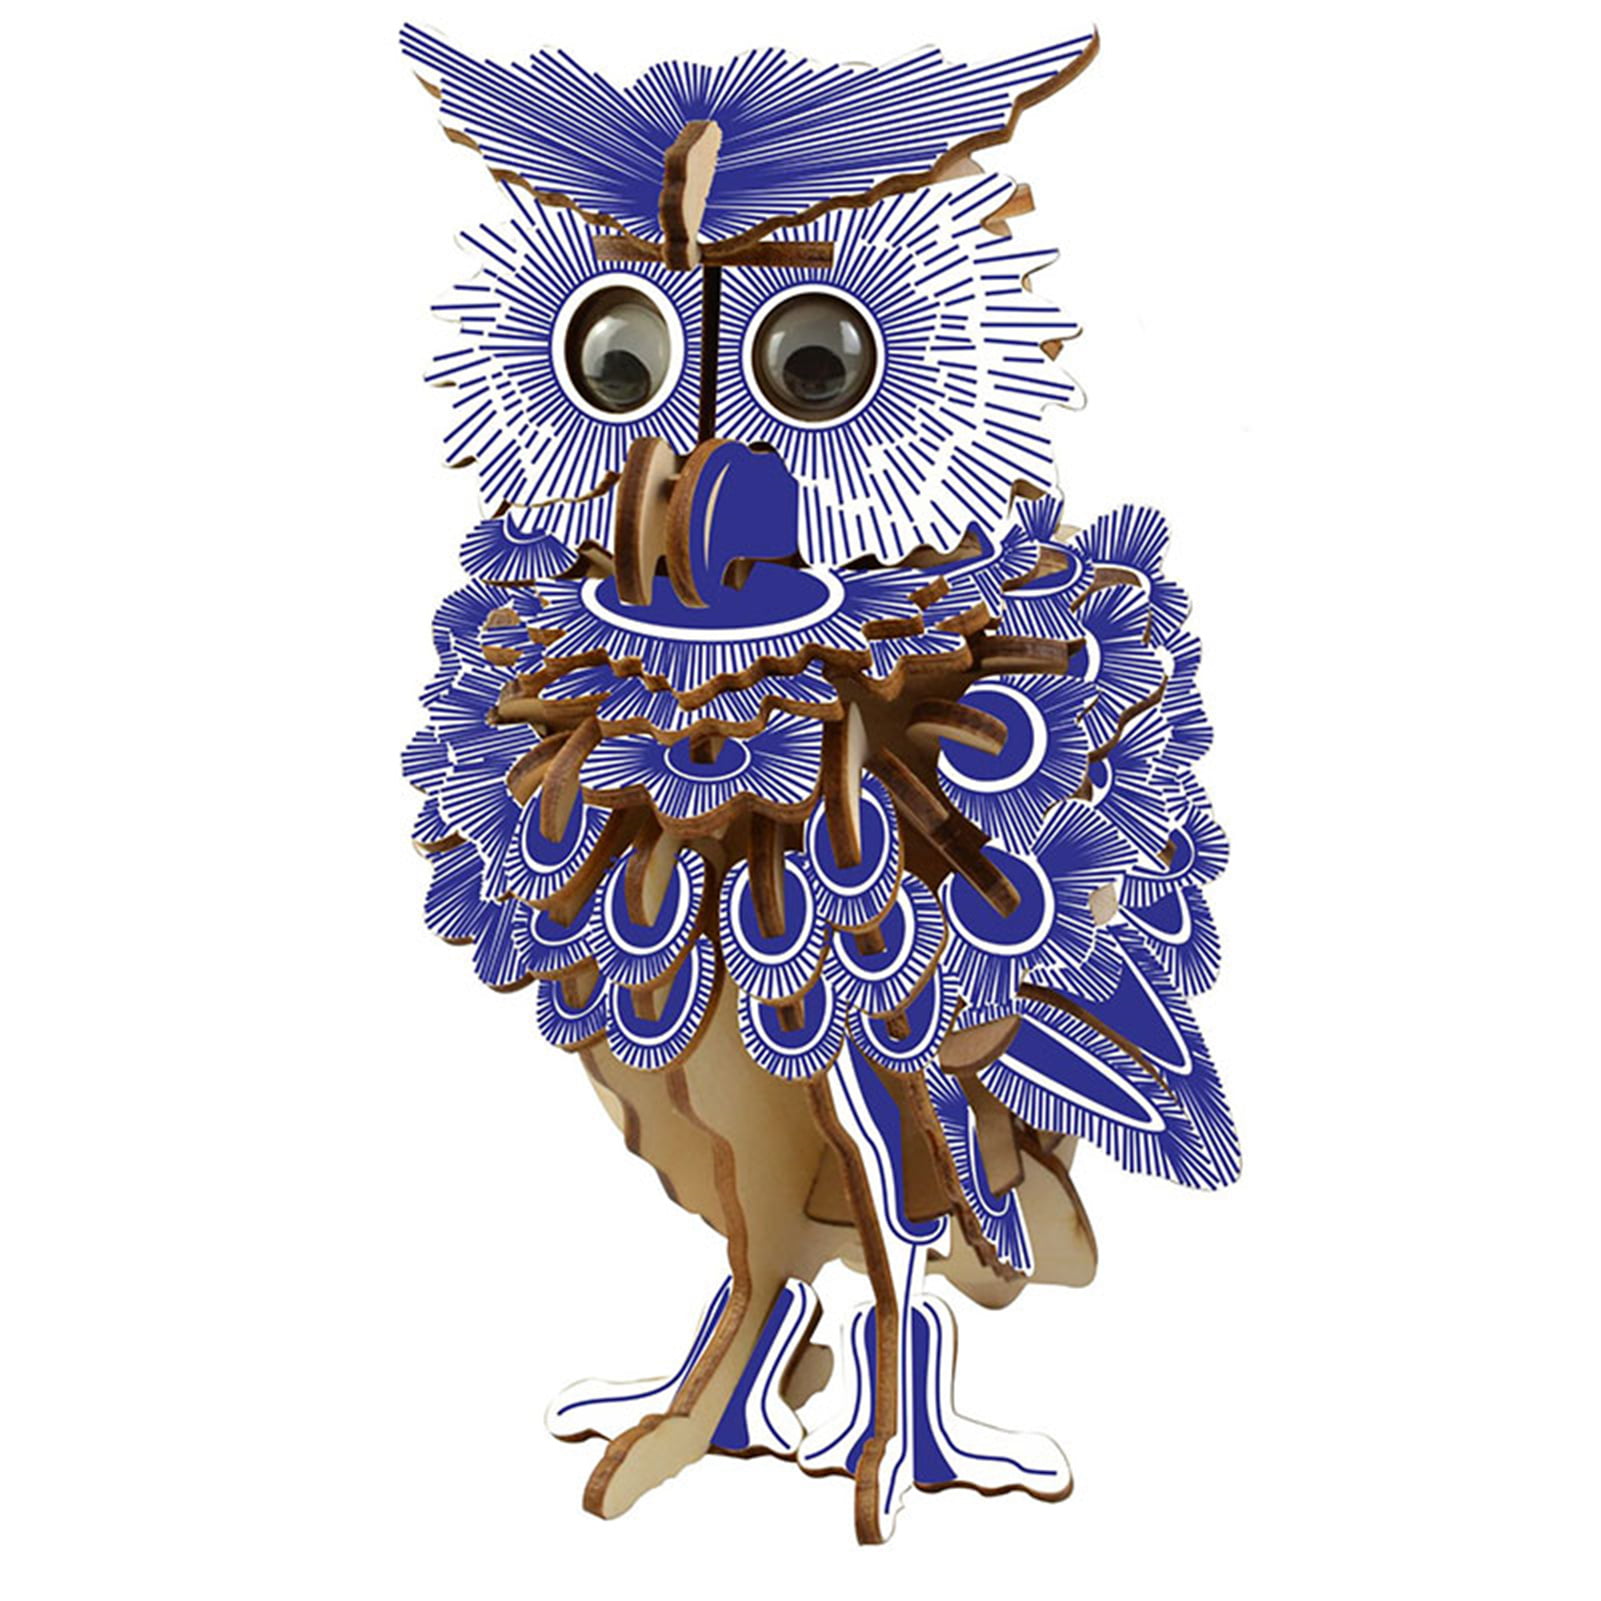 3D Wooden Cartoon Owl Design Adult Kids Toy Decor Puzzle Jigsaw Pieces Gift d a 